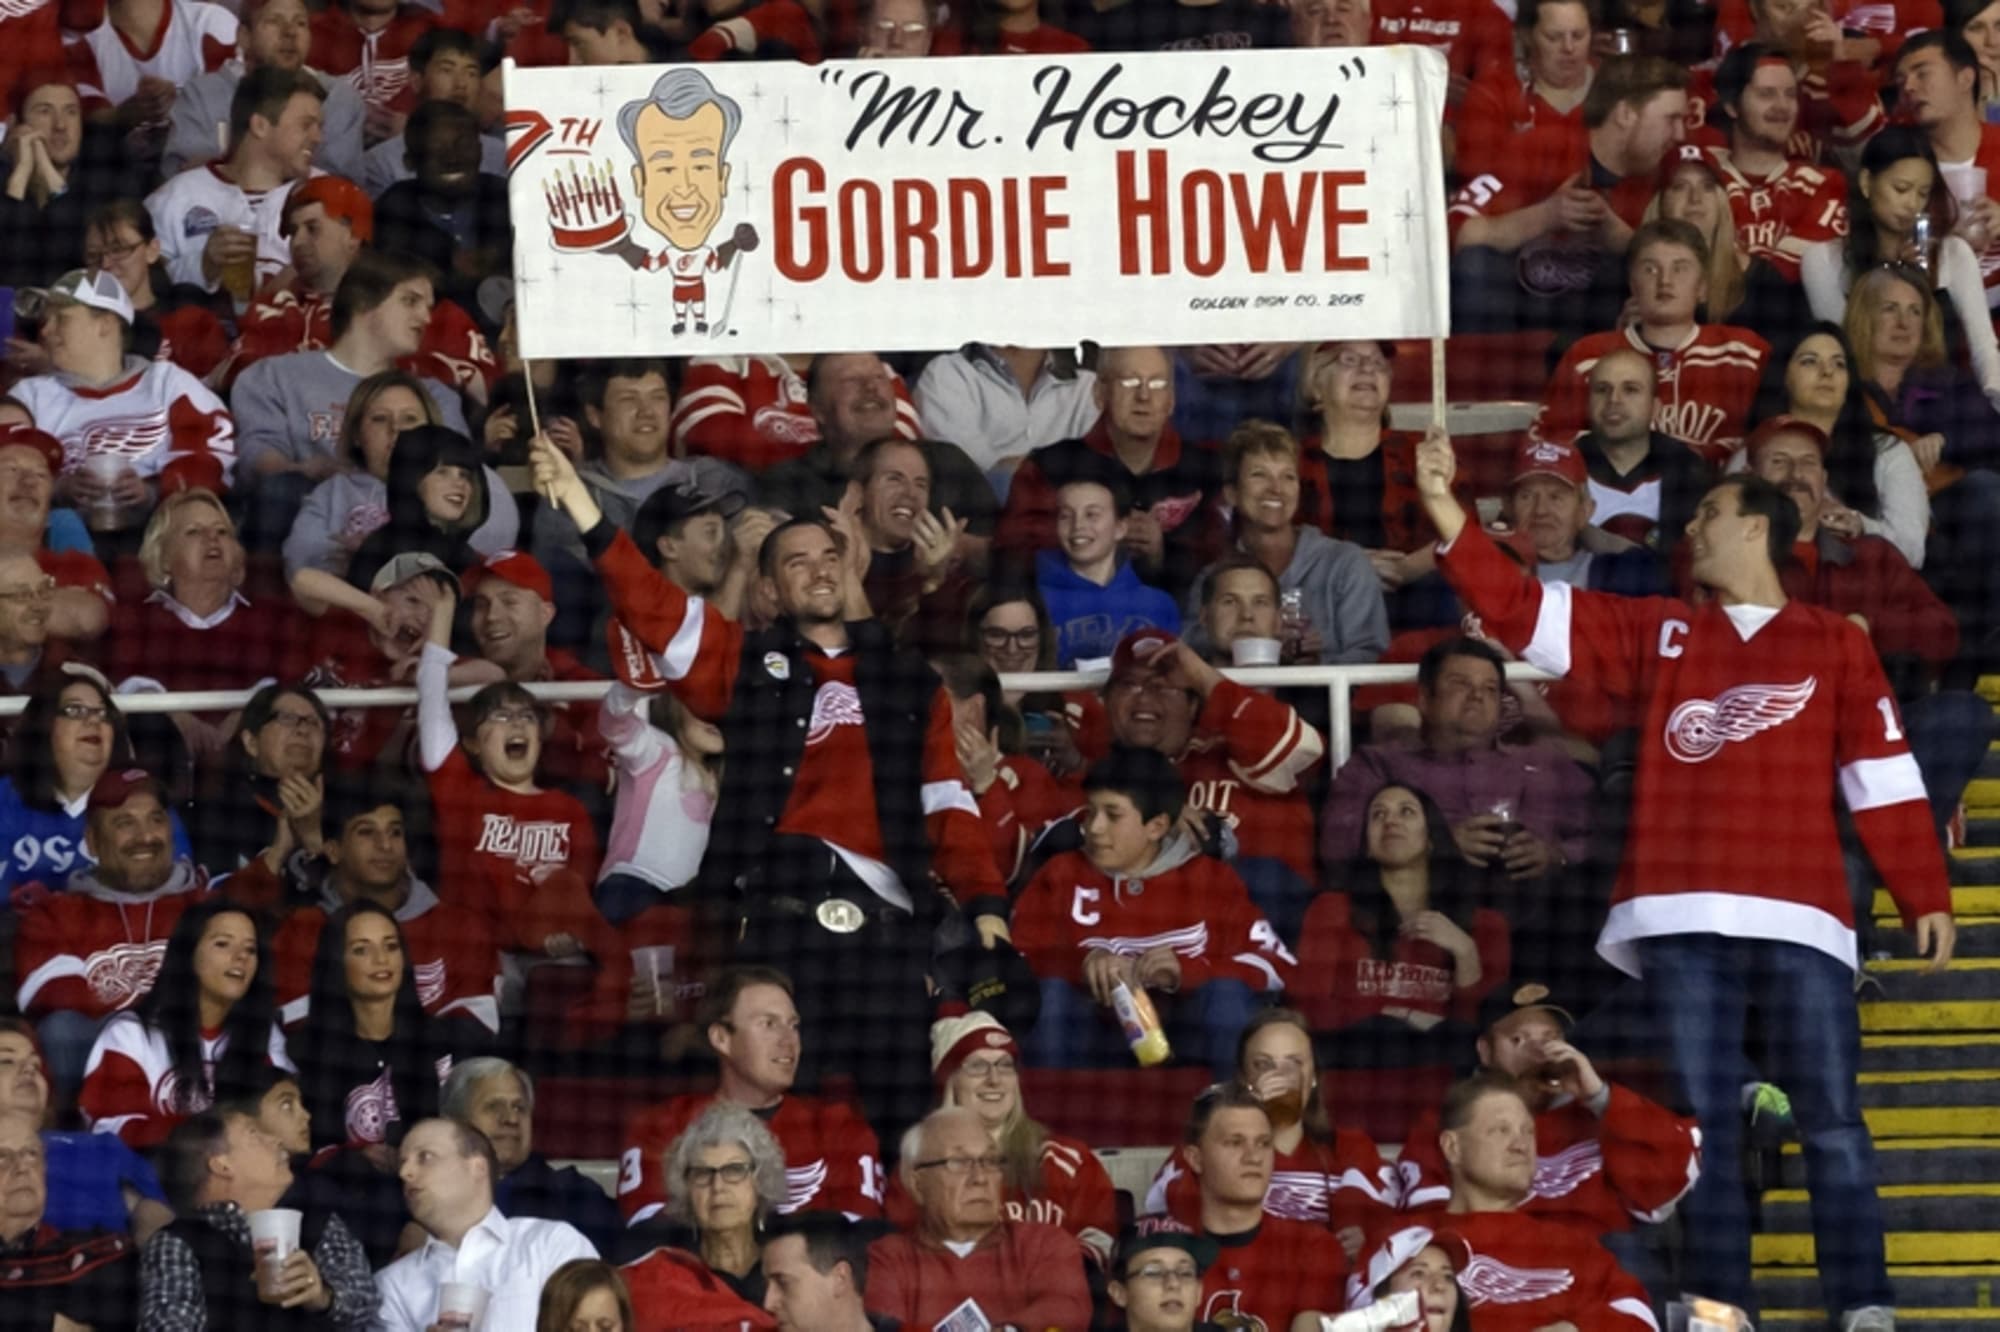 Wayne Gretzky: Gordie Howe was my idol - Sports Illustrated